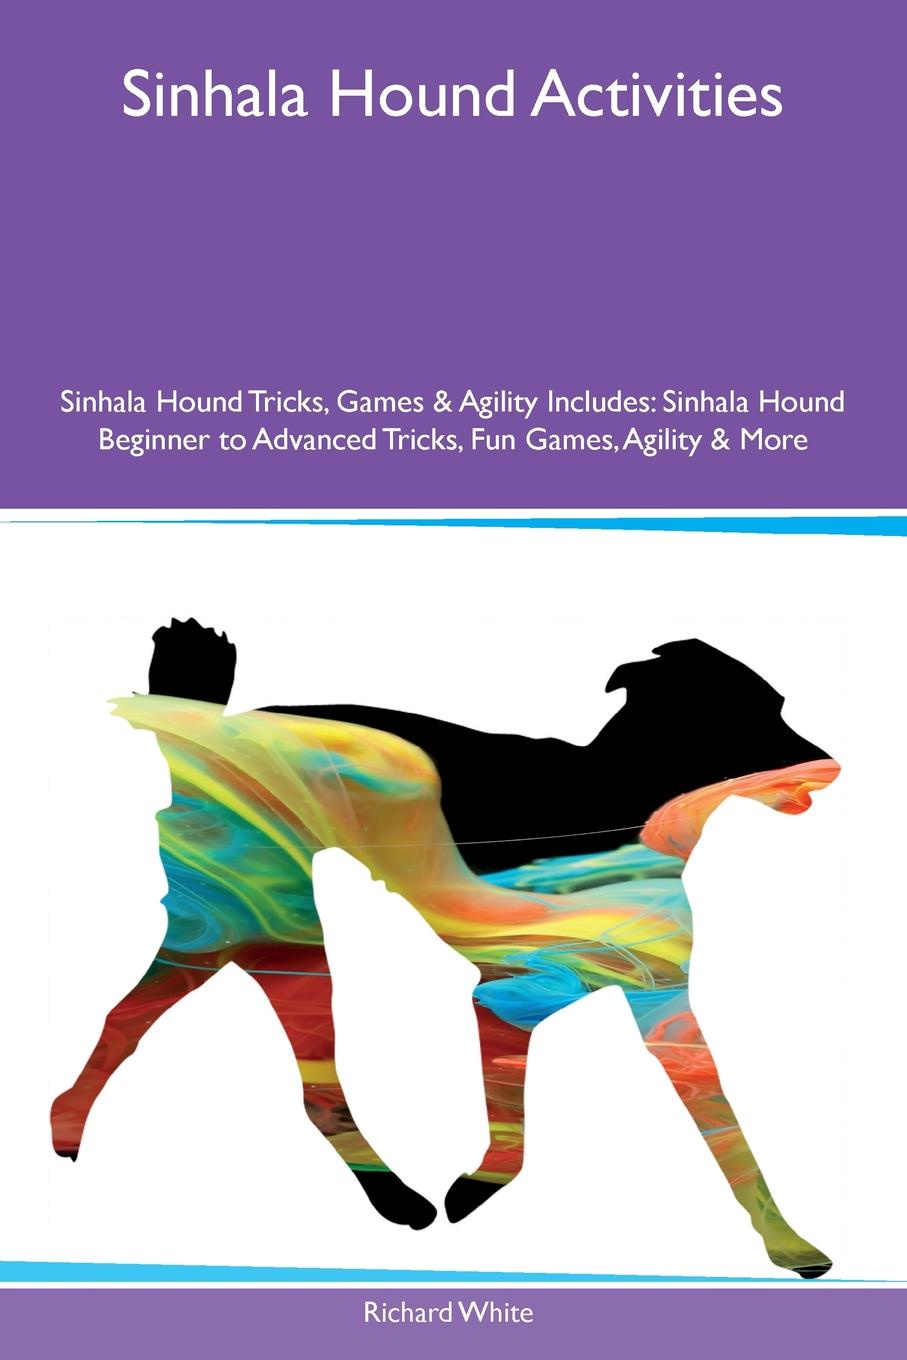 Sinhala Hound Activities Sinhala Hound Tricks, Games & Agility Includes. Sinhala Hound Beginner to Advanced Tricks, Fun Games, Agility & More